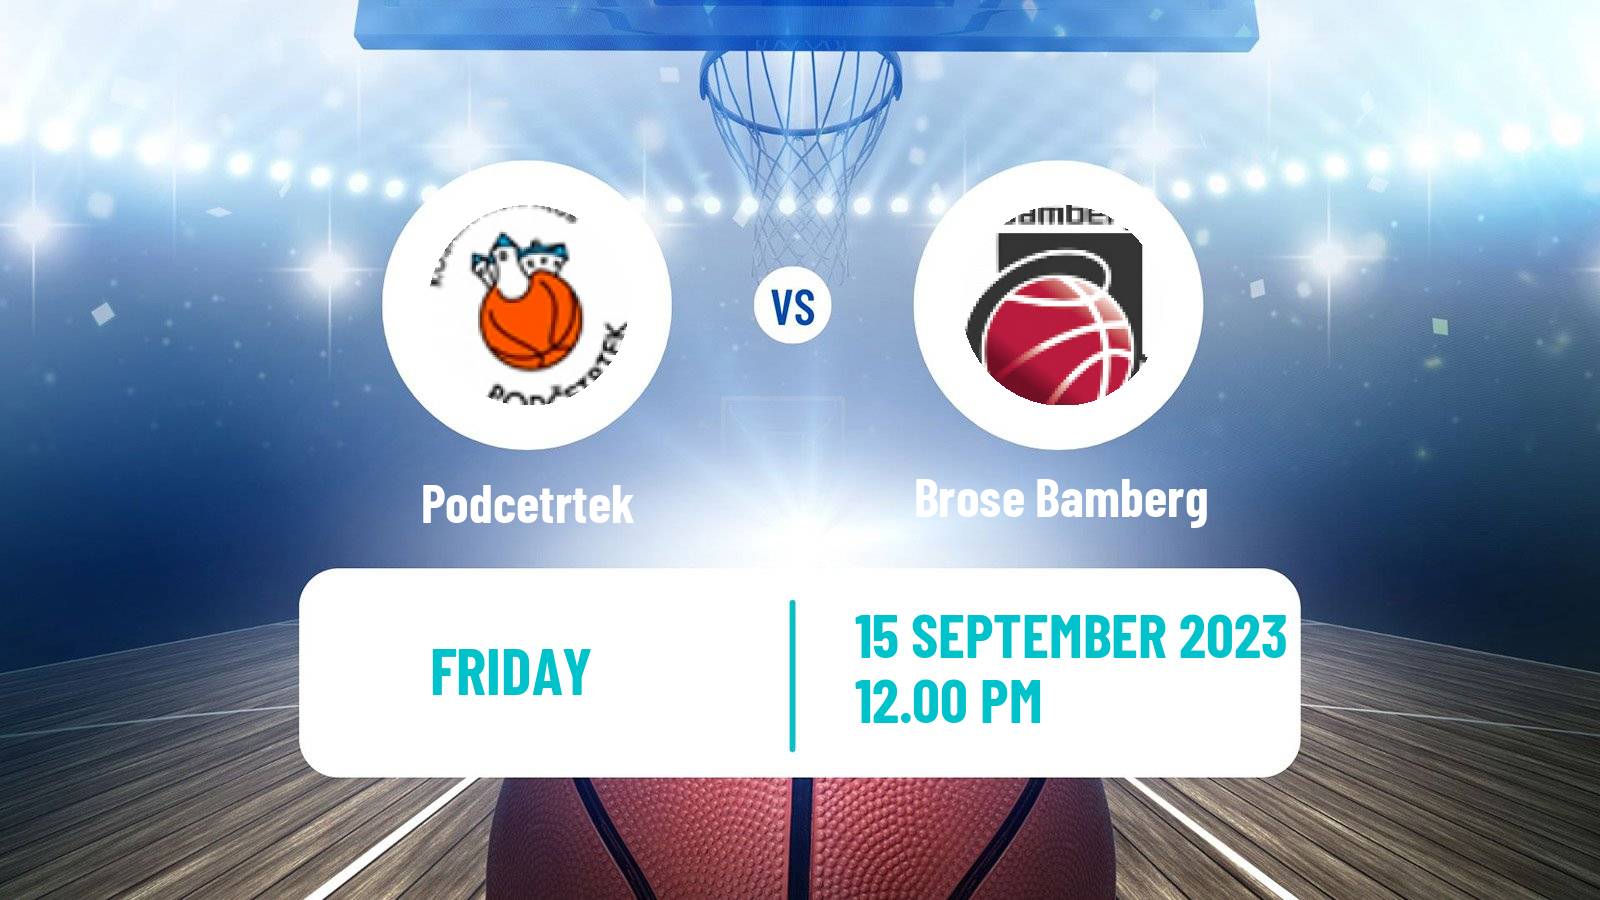 Basketball Club Friendly Basketball Podcetrtek - Brose Bamberg